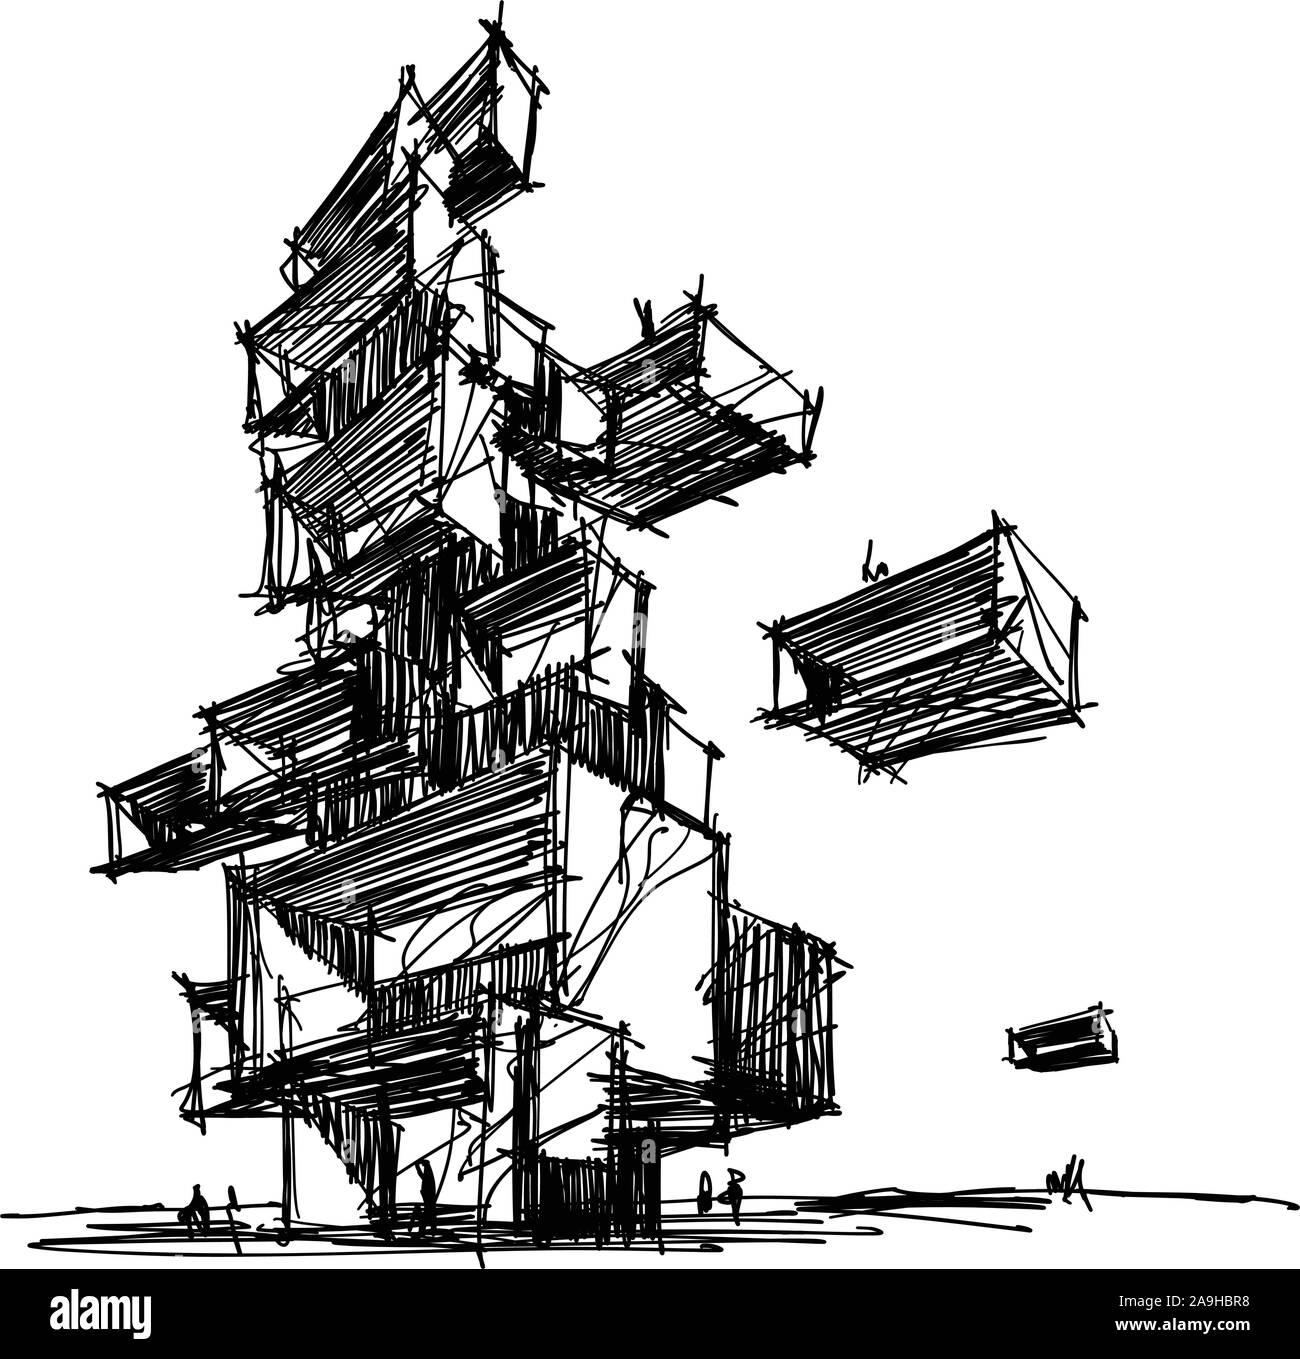 Ghislain LEFORT - Sketch of a futuristic city